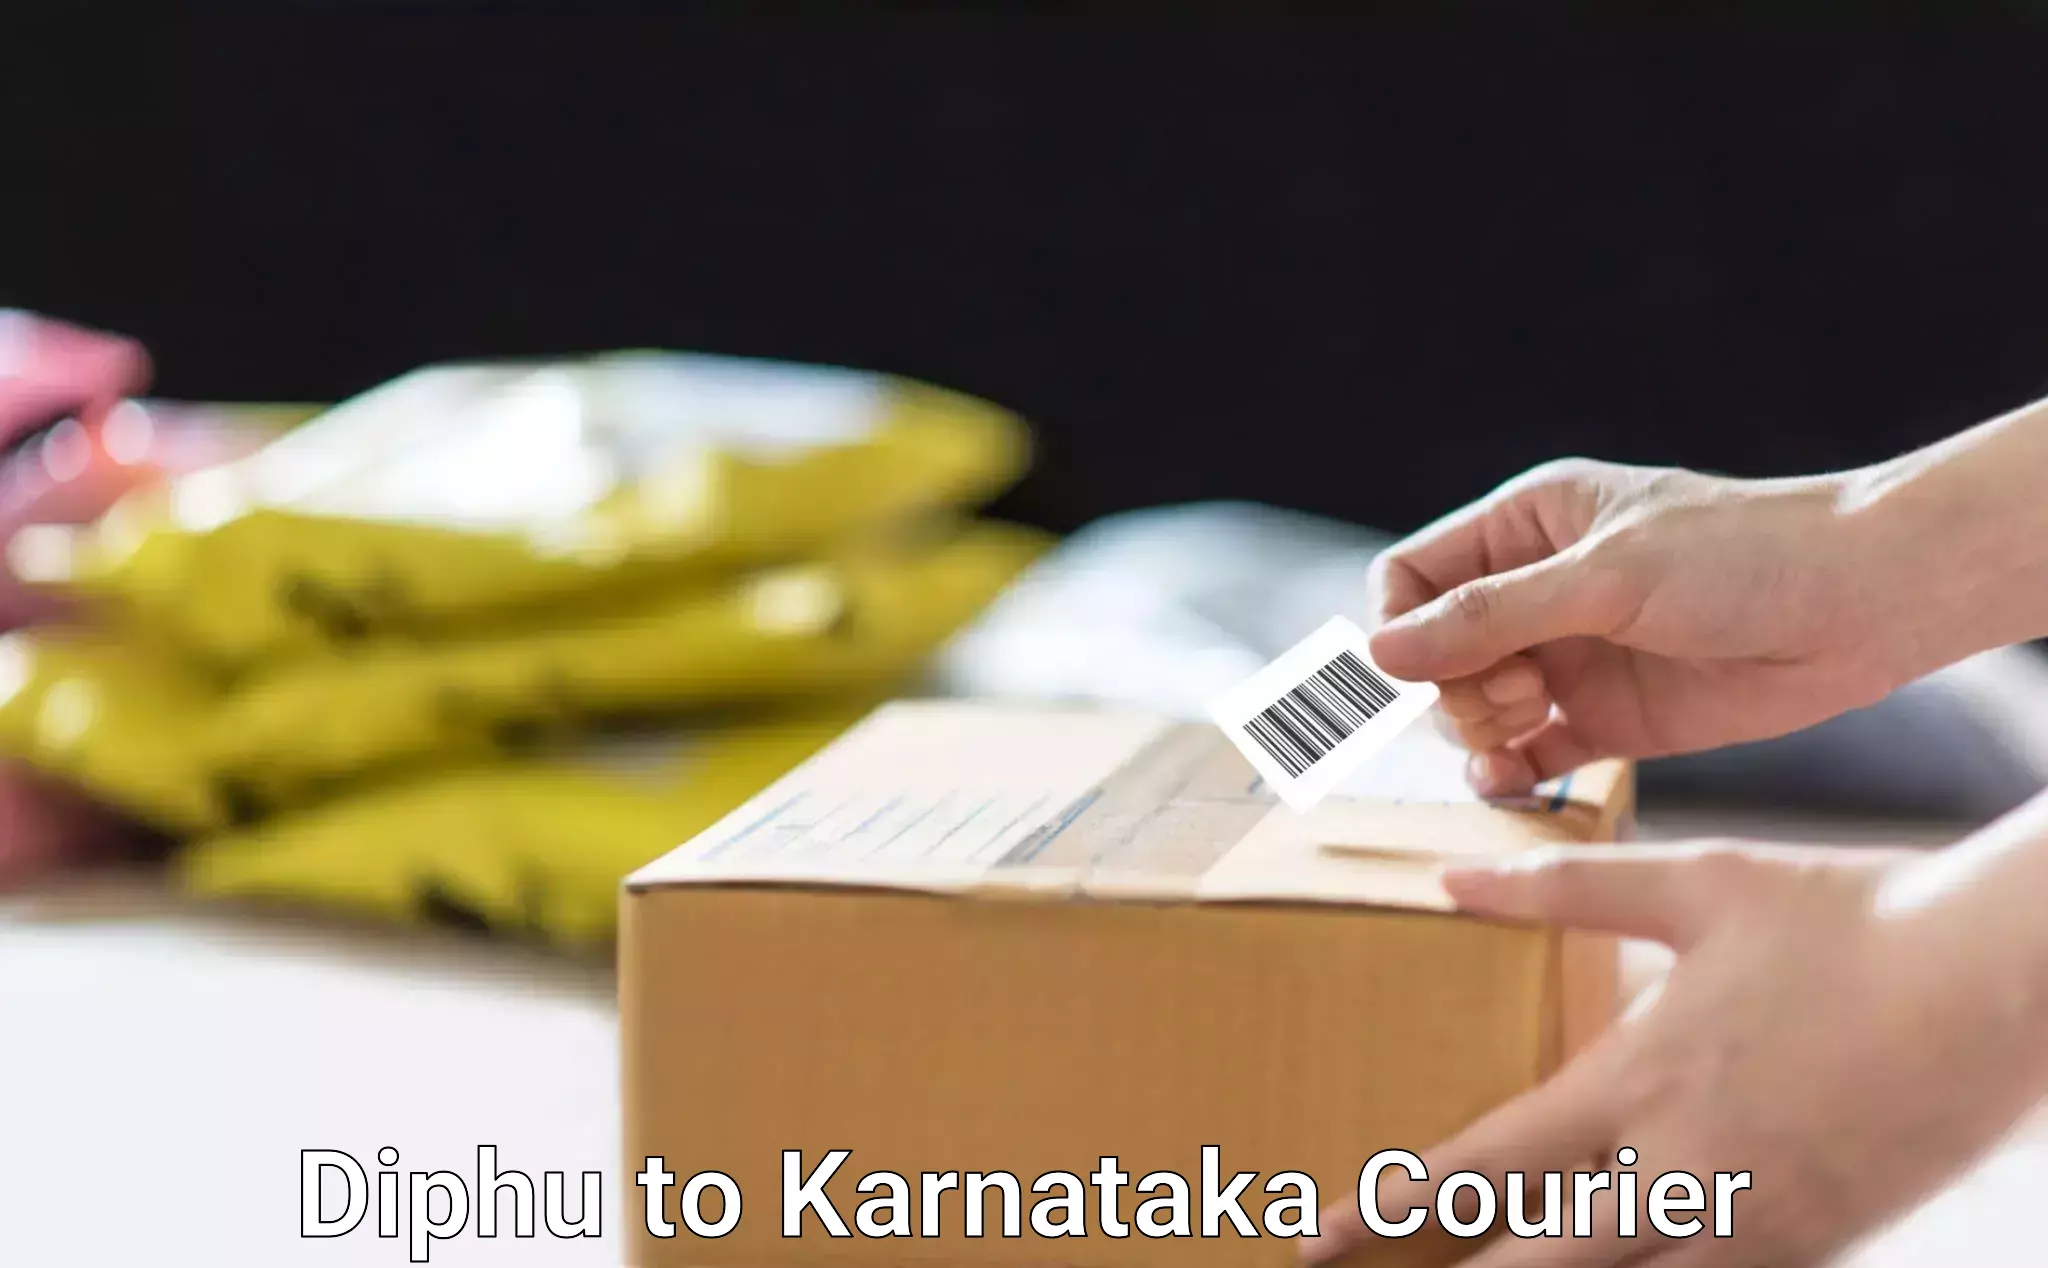 Next-day delivery options Diphu to Karnataka